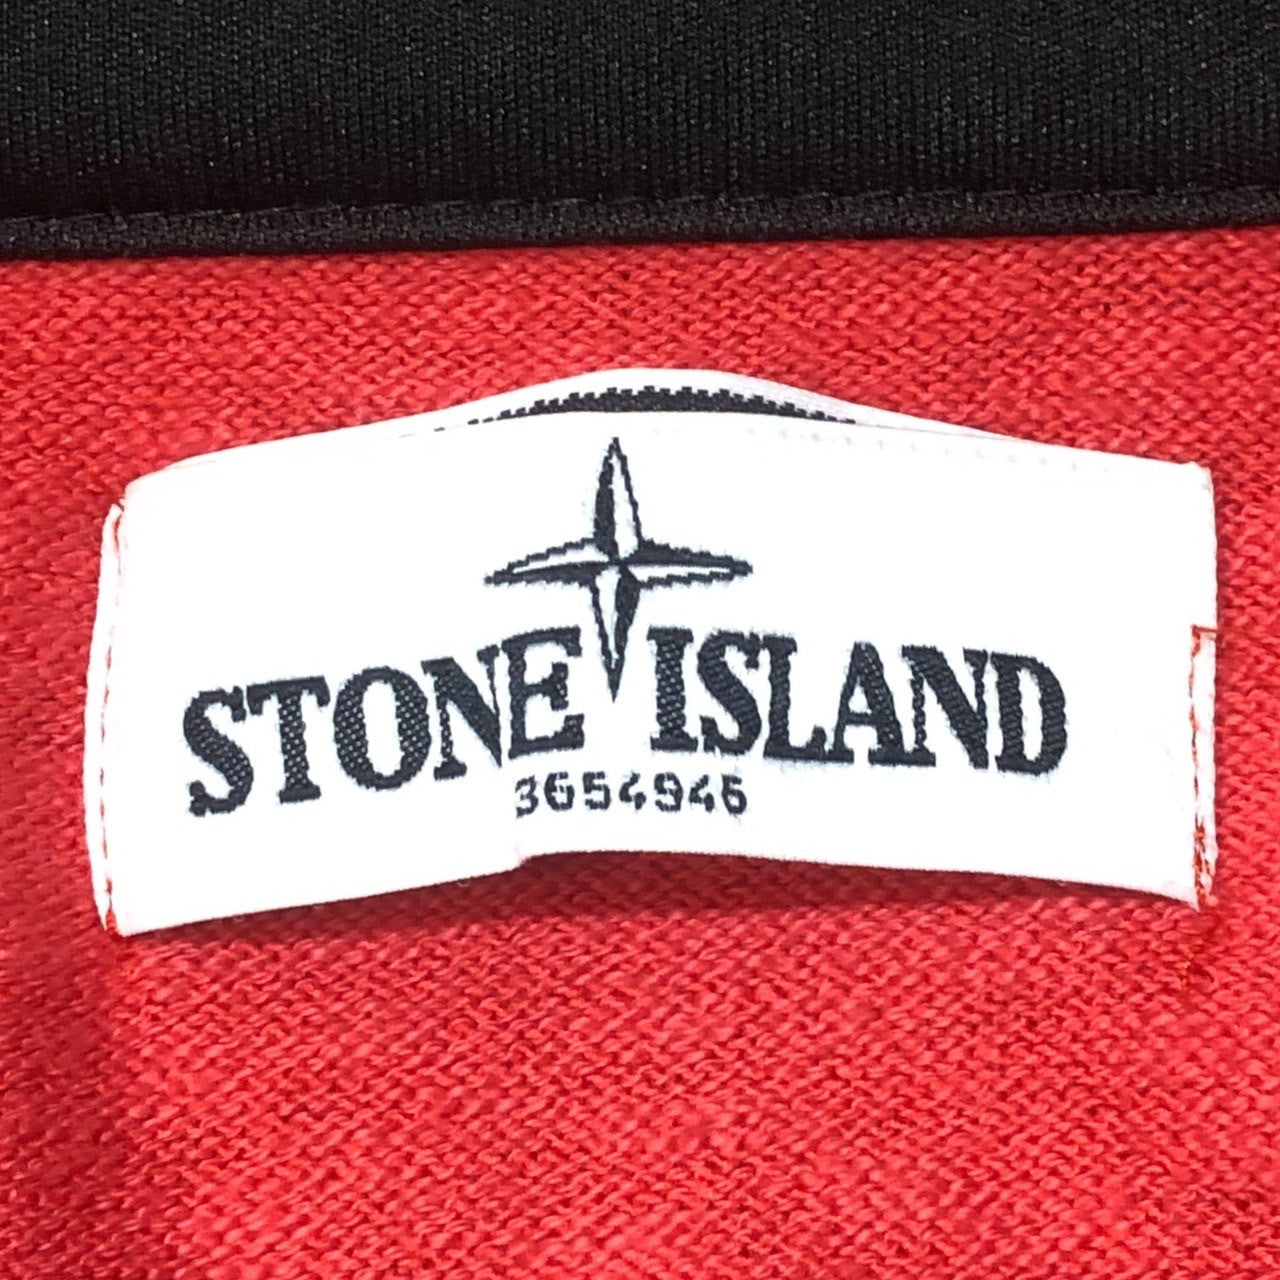 STONE ISLAND(ストーンアイランド) 13SS Zip up knit jacket ジップ 